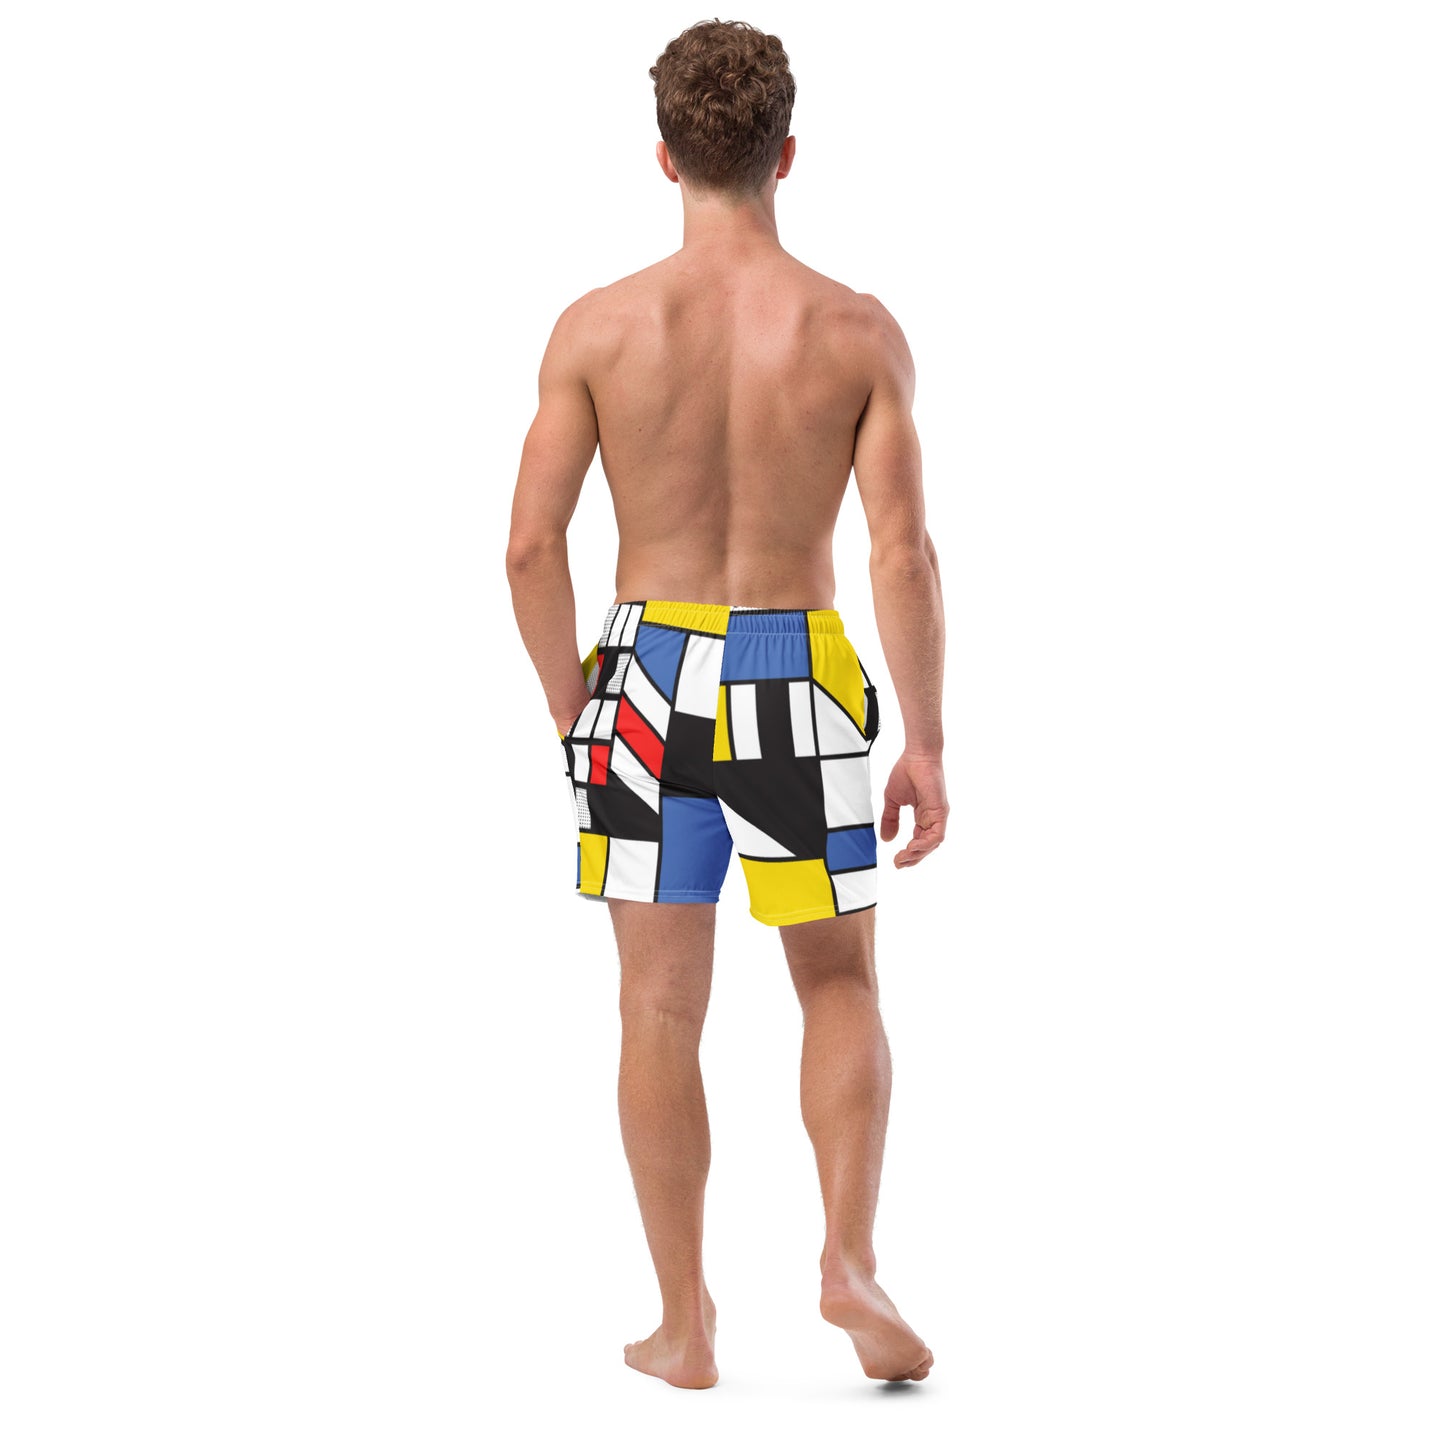 Mondrian swim trunks